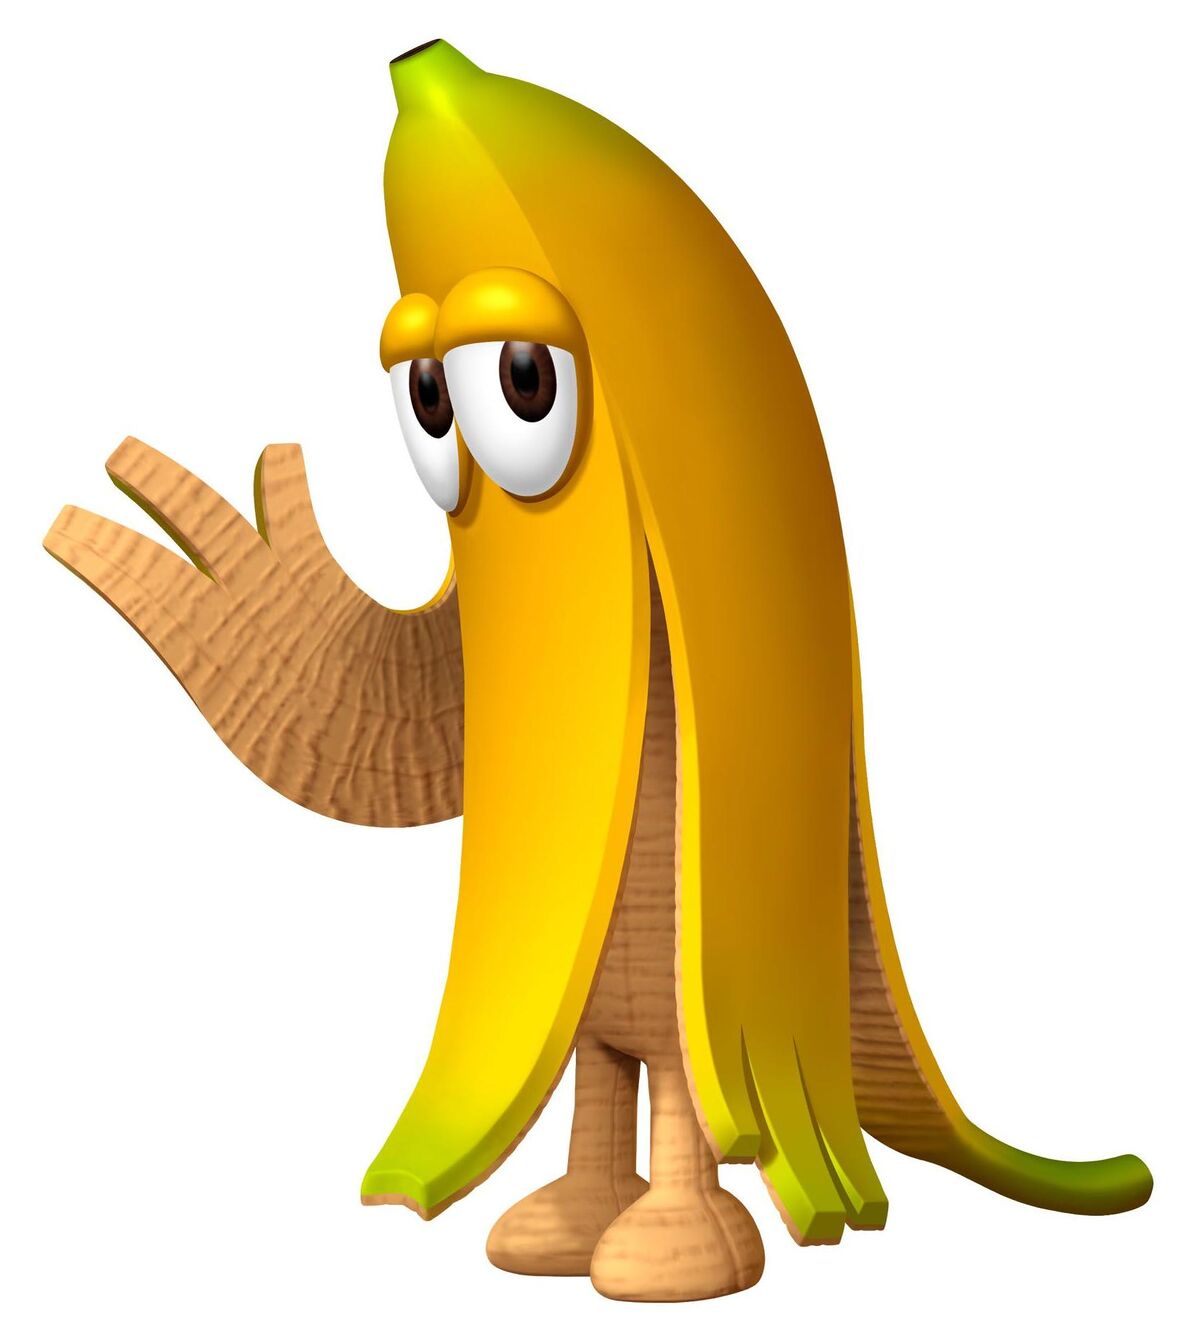 Banana (video game) - Wikipedia